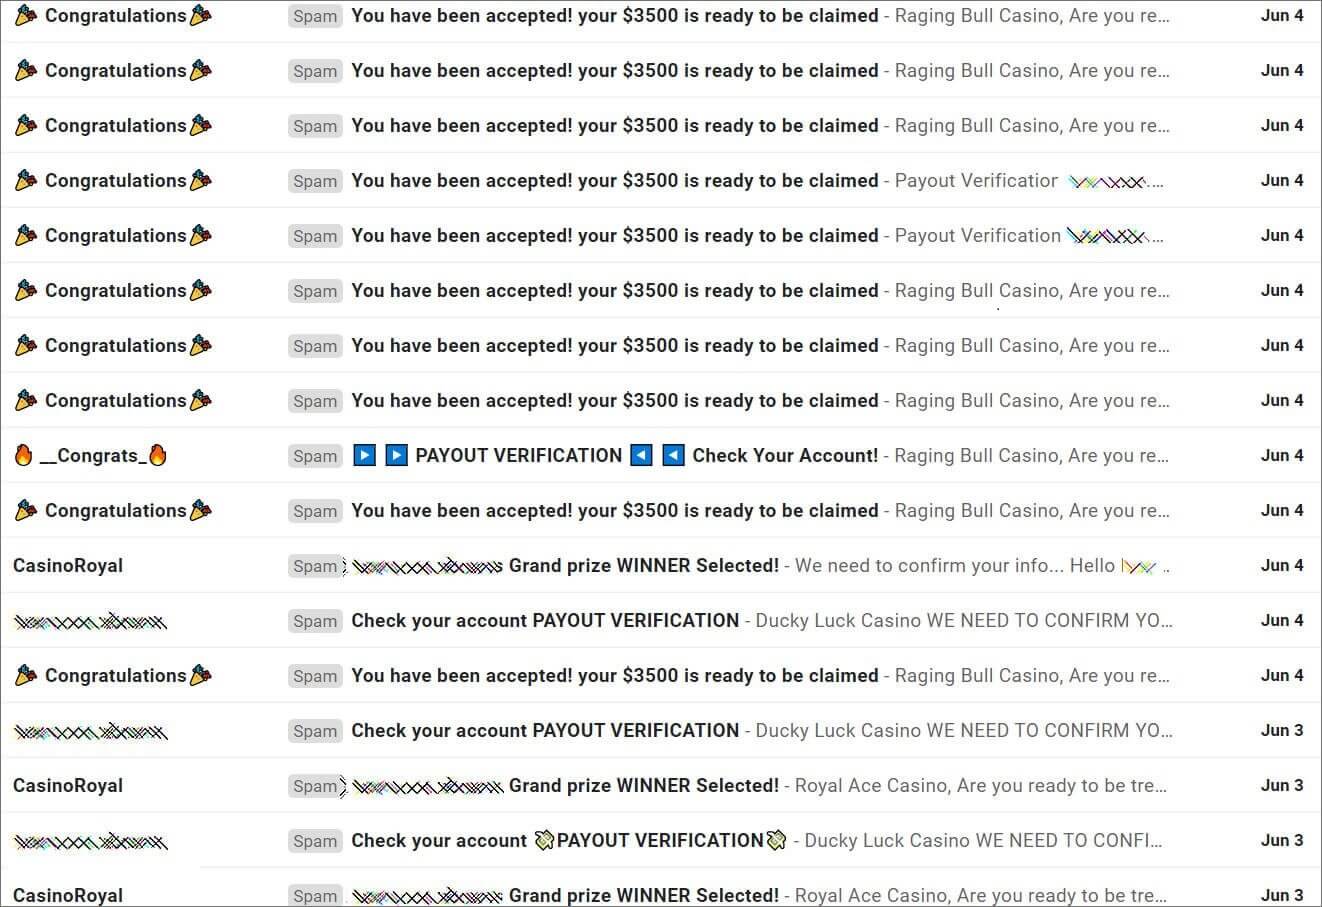 A constant stream of online casino spam